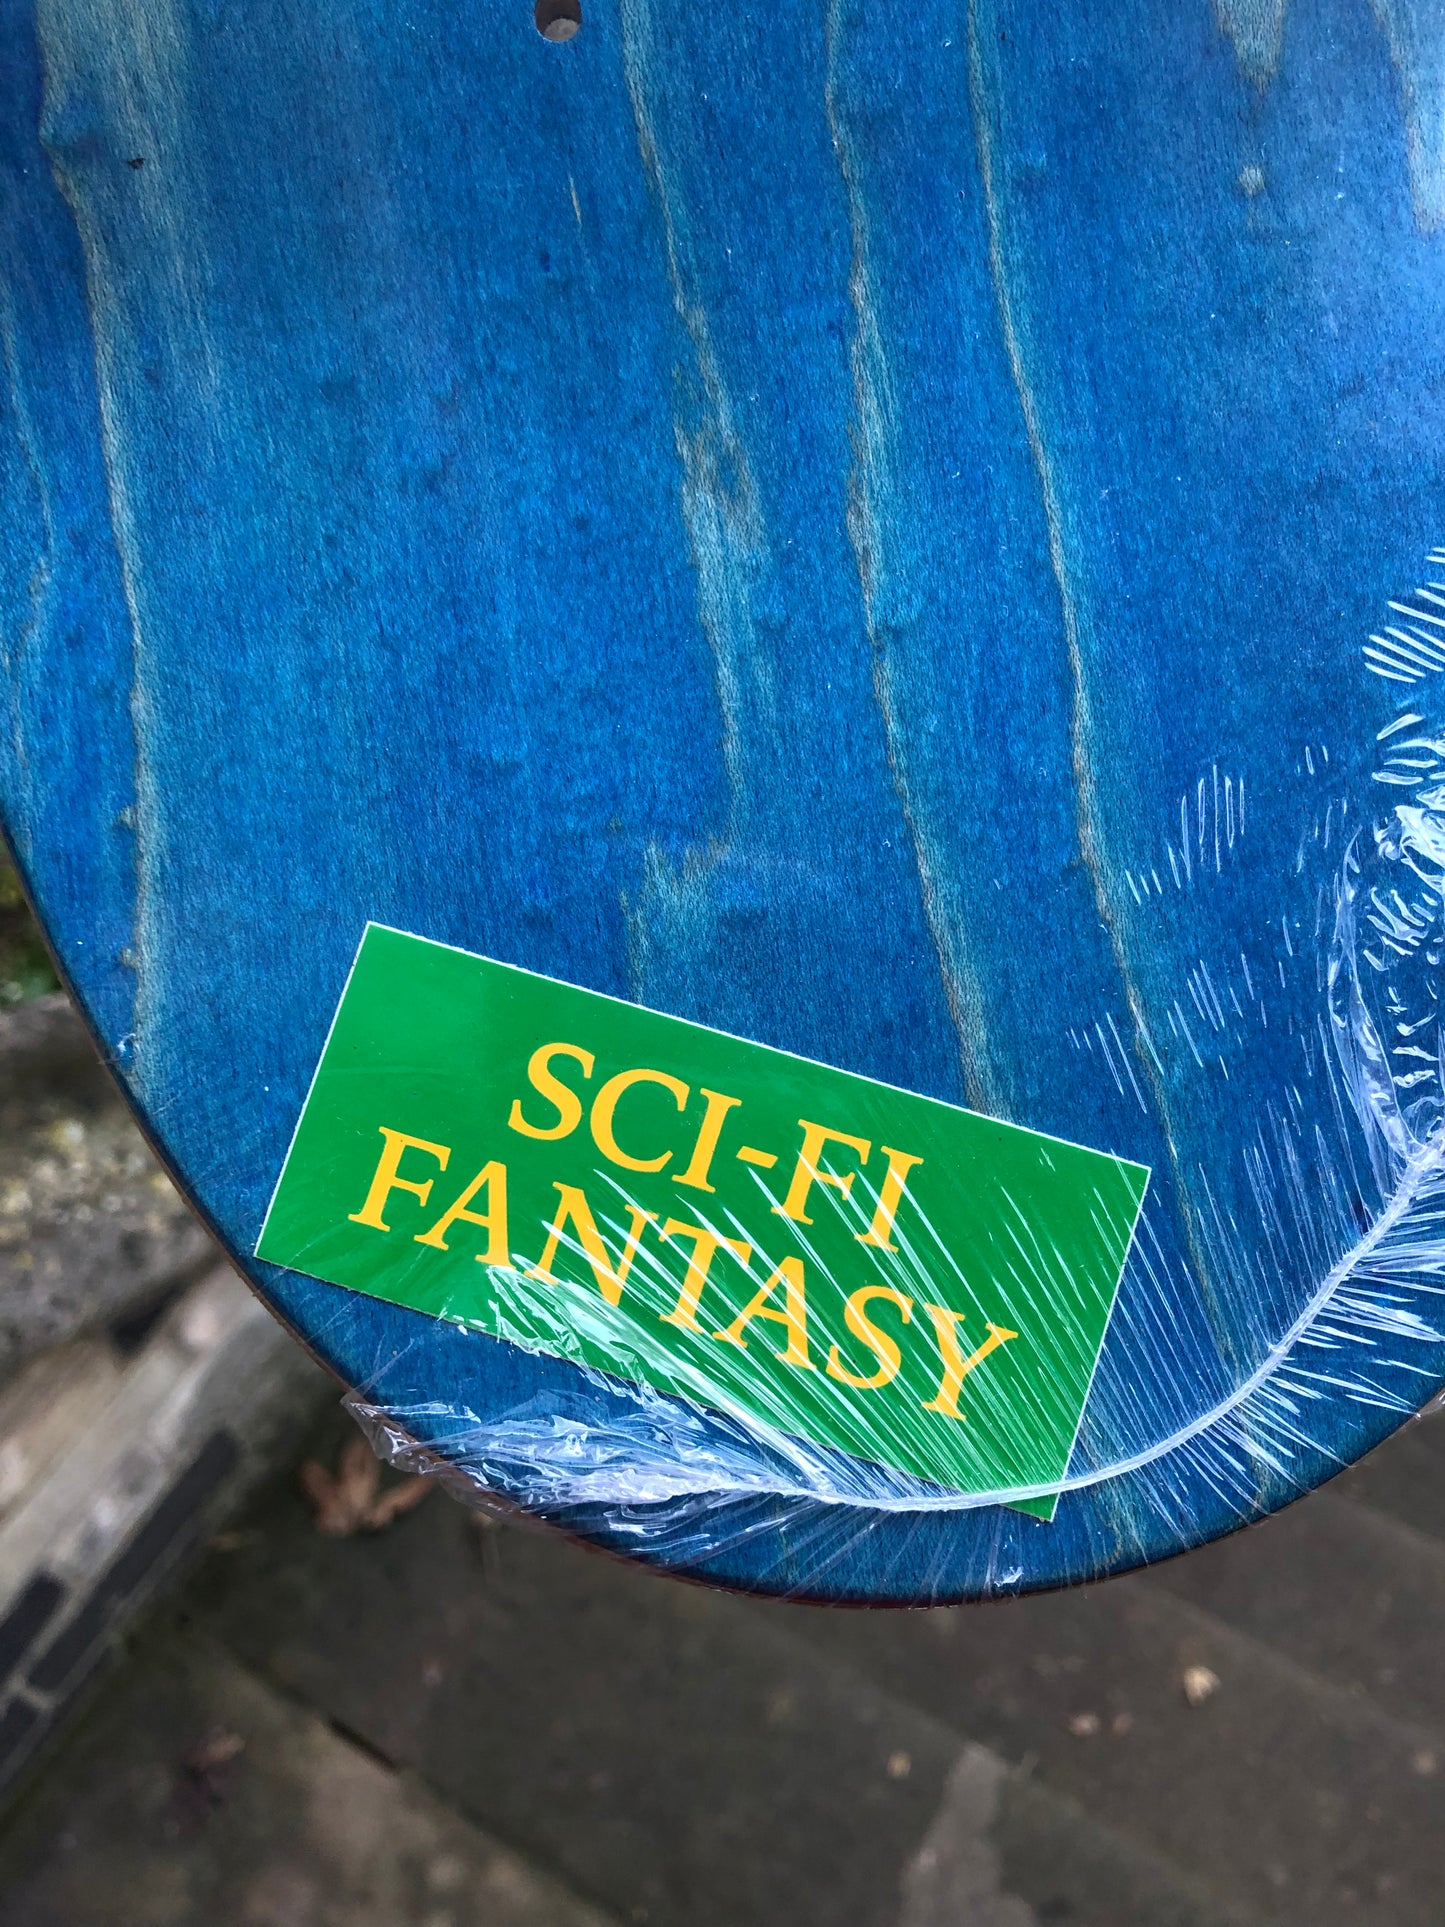 Sci Fi Fantasy Jerry Hsu Paypal Deck 8.25”